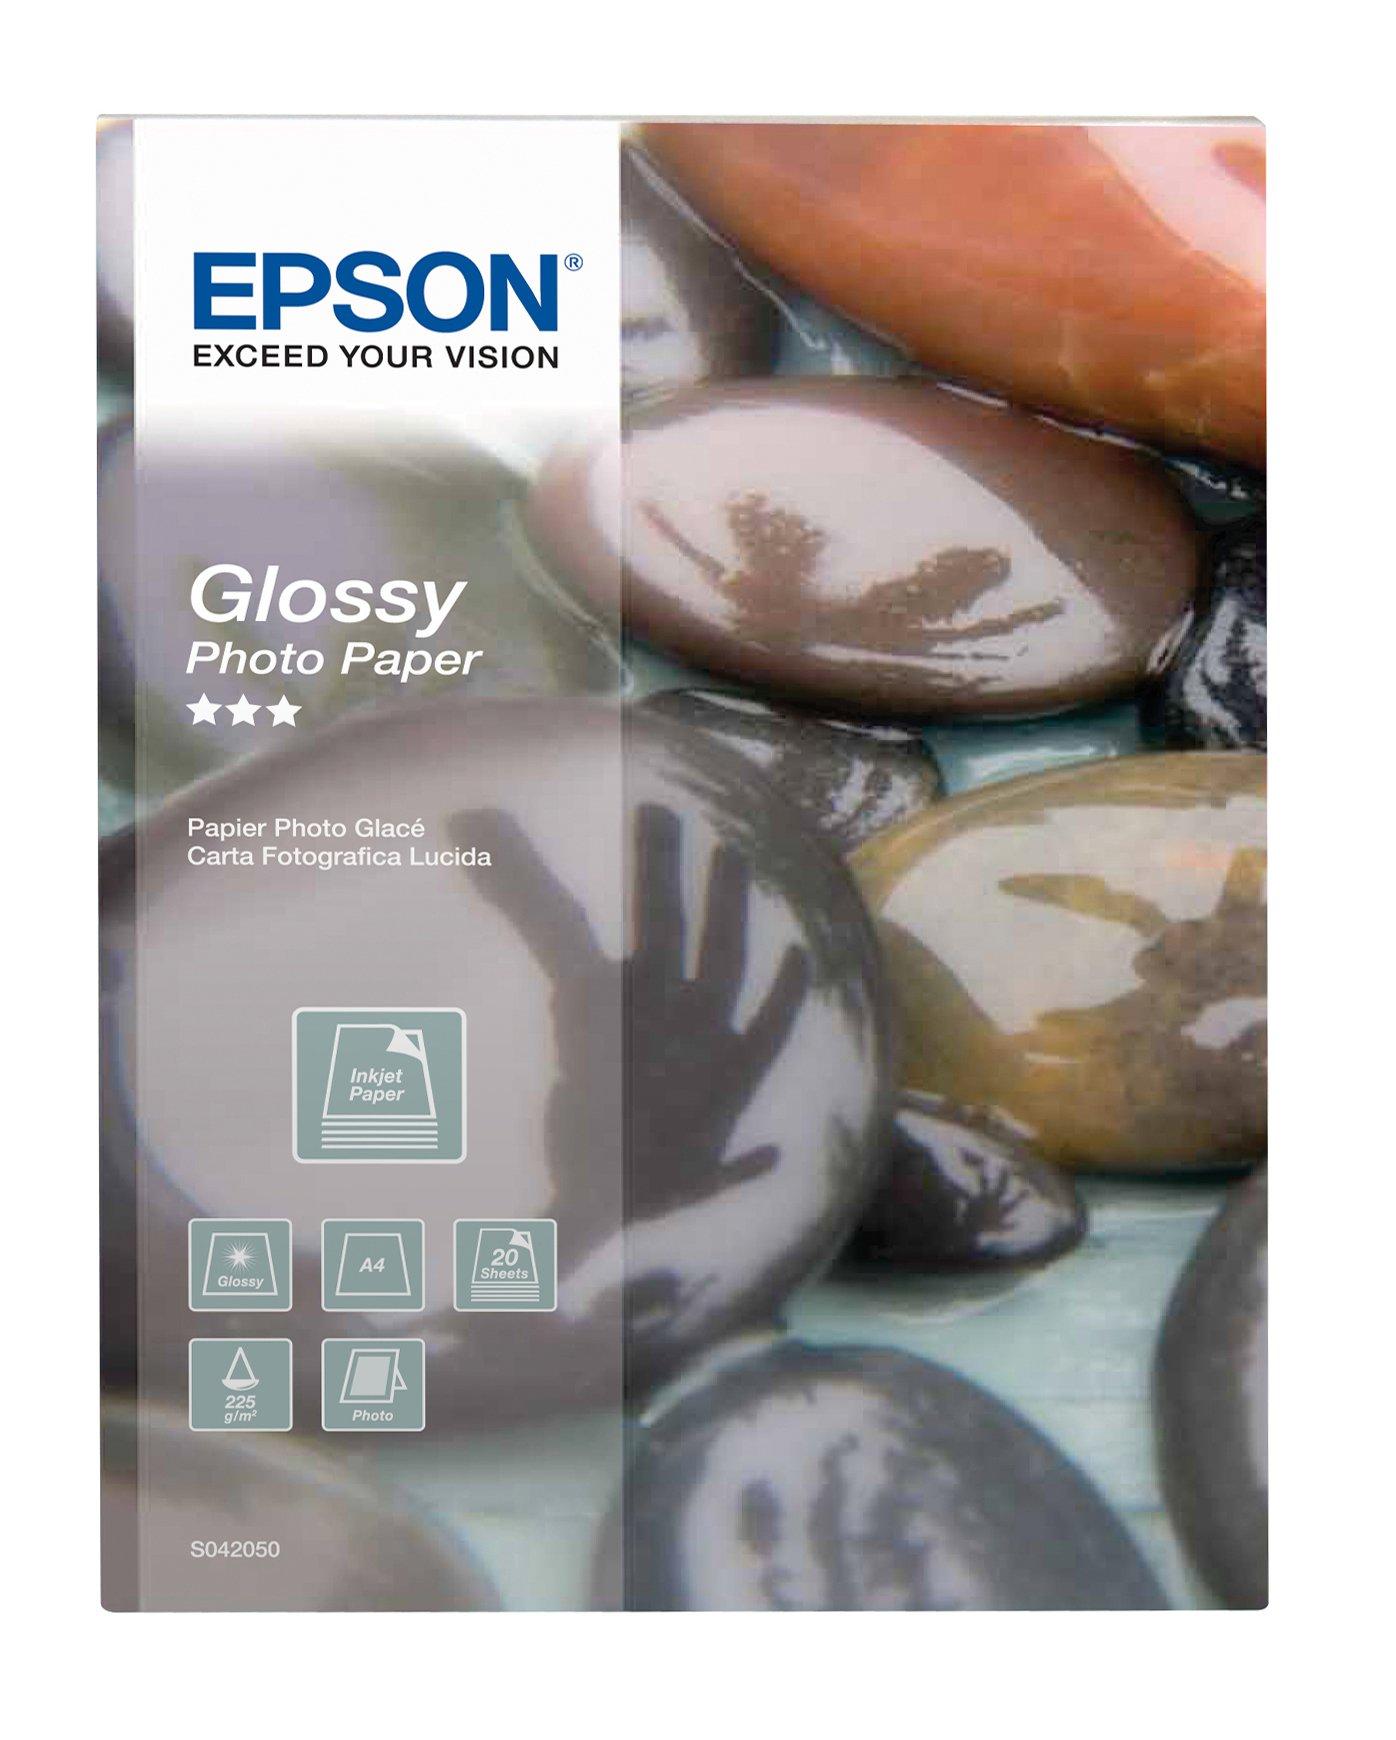 Expression Home XP-2200 - EPSON Europe - Catalogue PDF